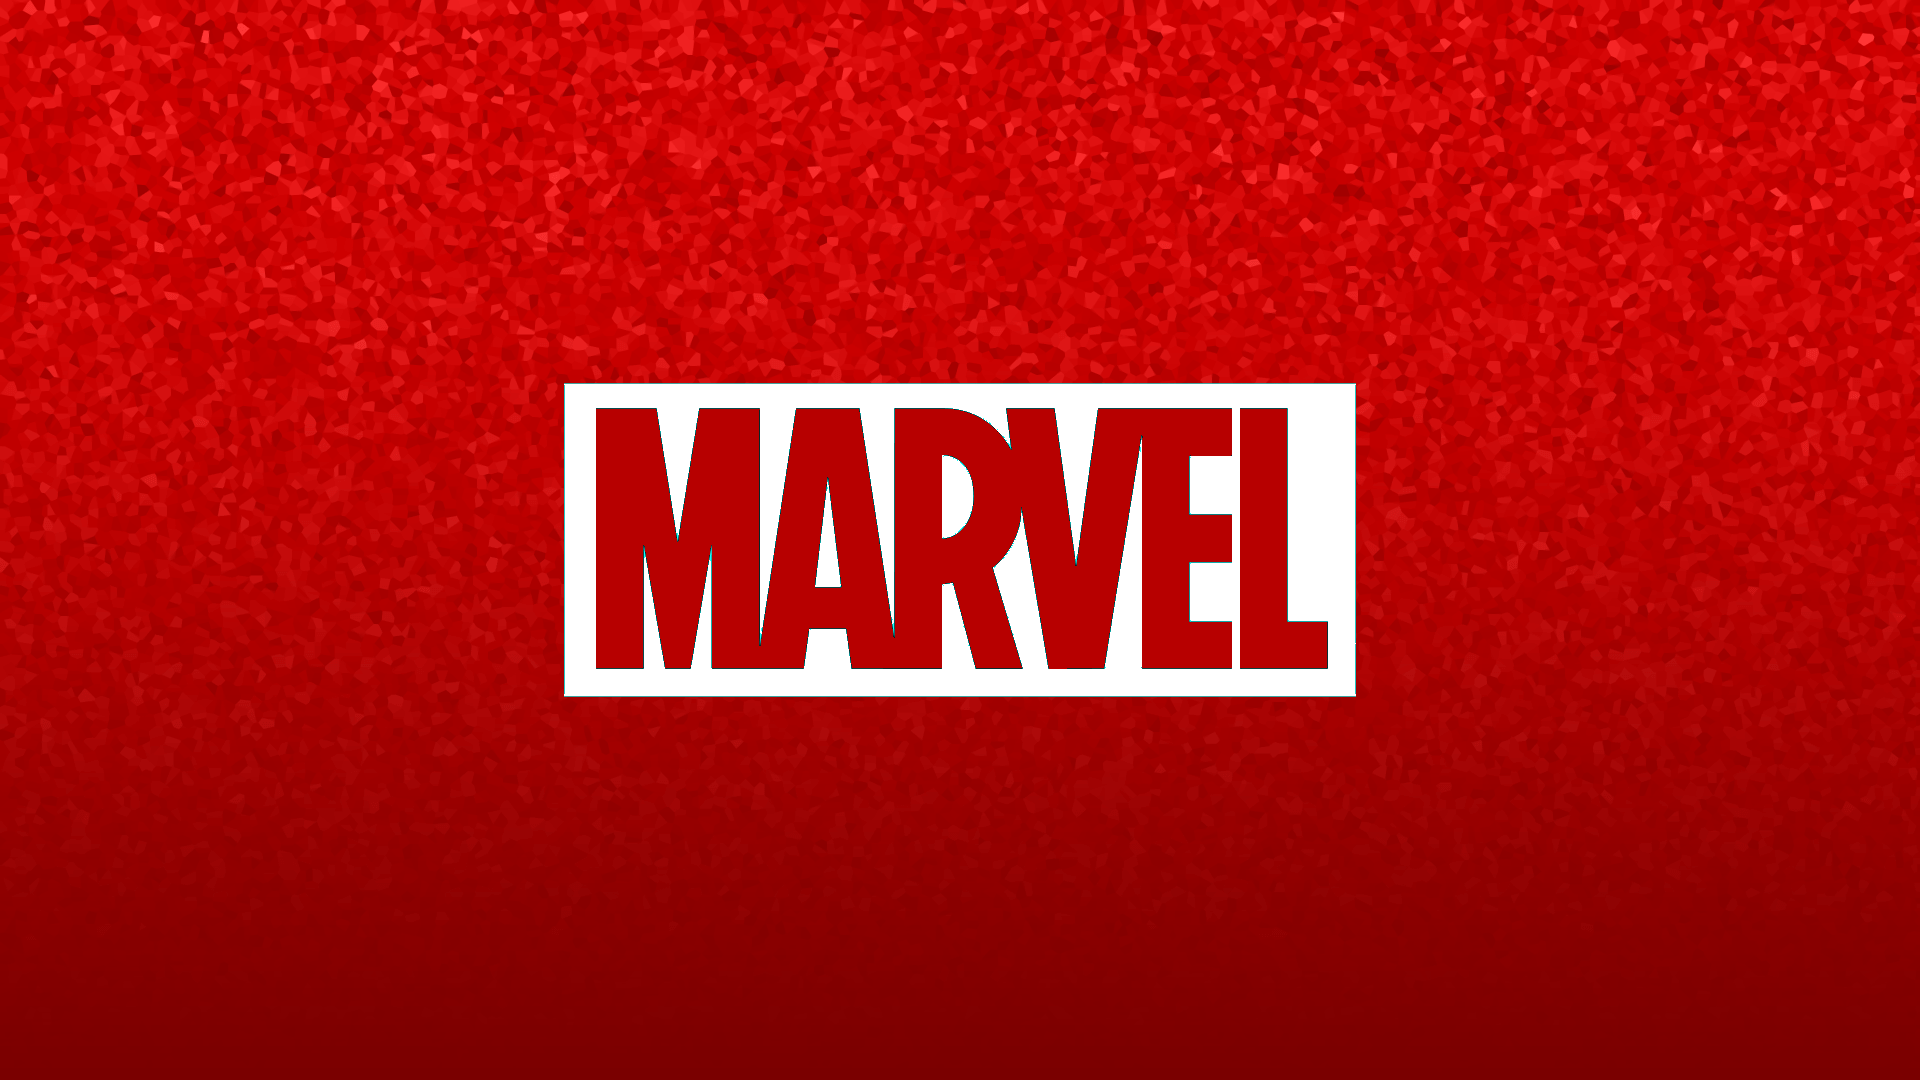 Wallpaper Pack: Marvel Wallpaper, HD Widescreen Marvel